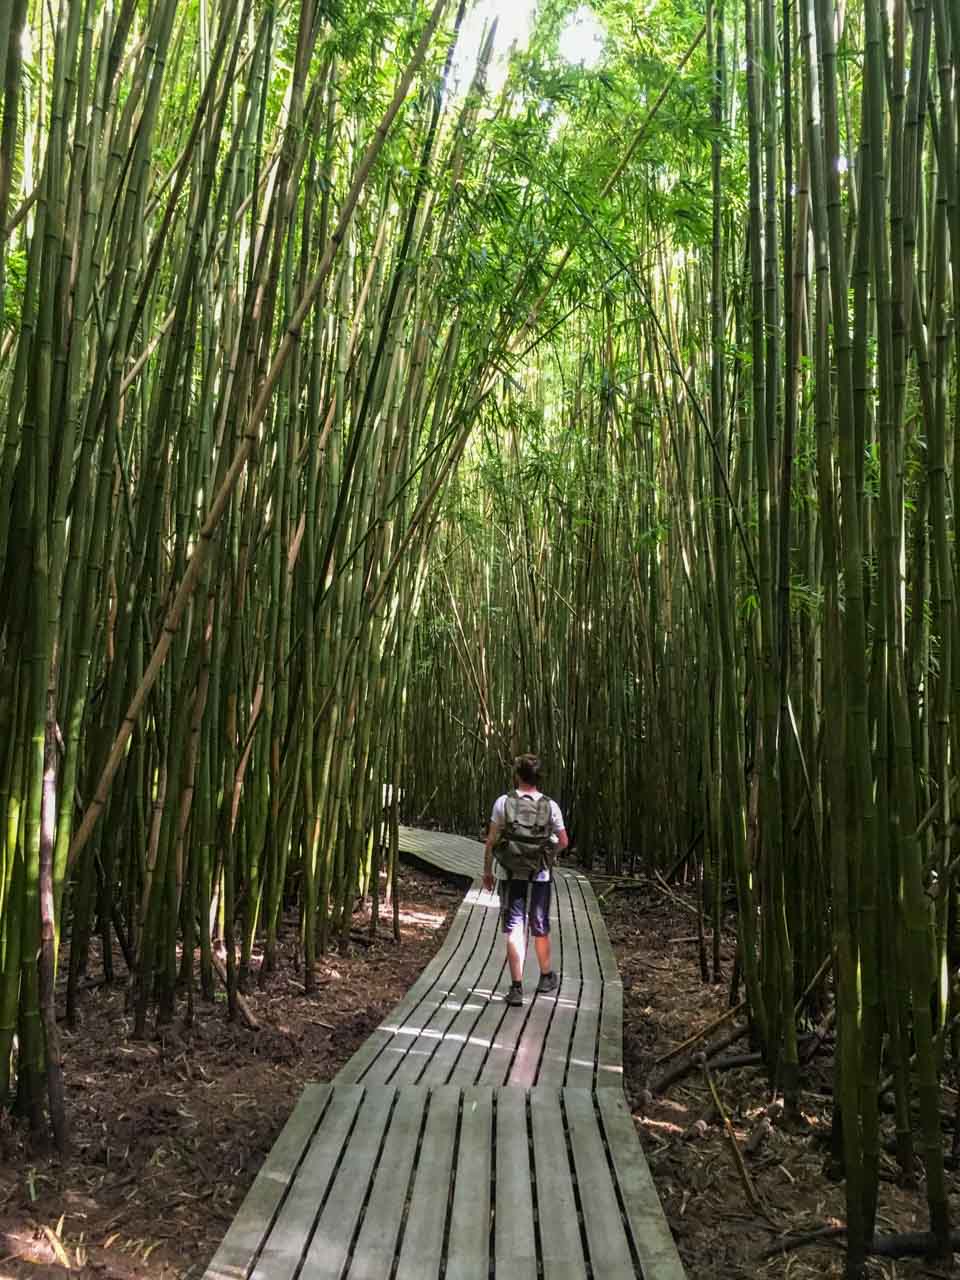 Hiker in Bamboo Forest, Kipahulu in Haleakala National Park, Maui